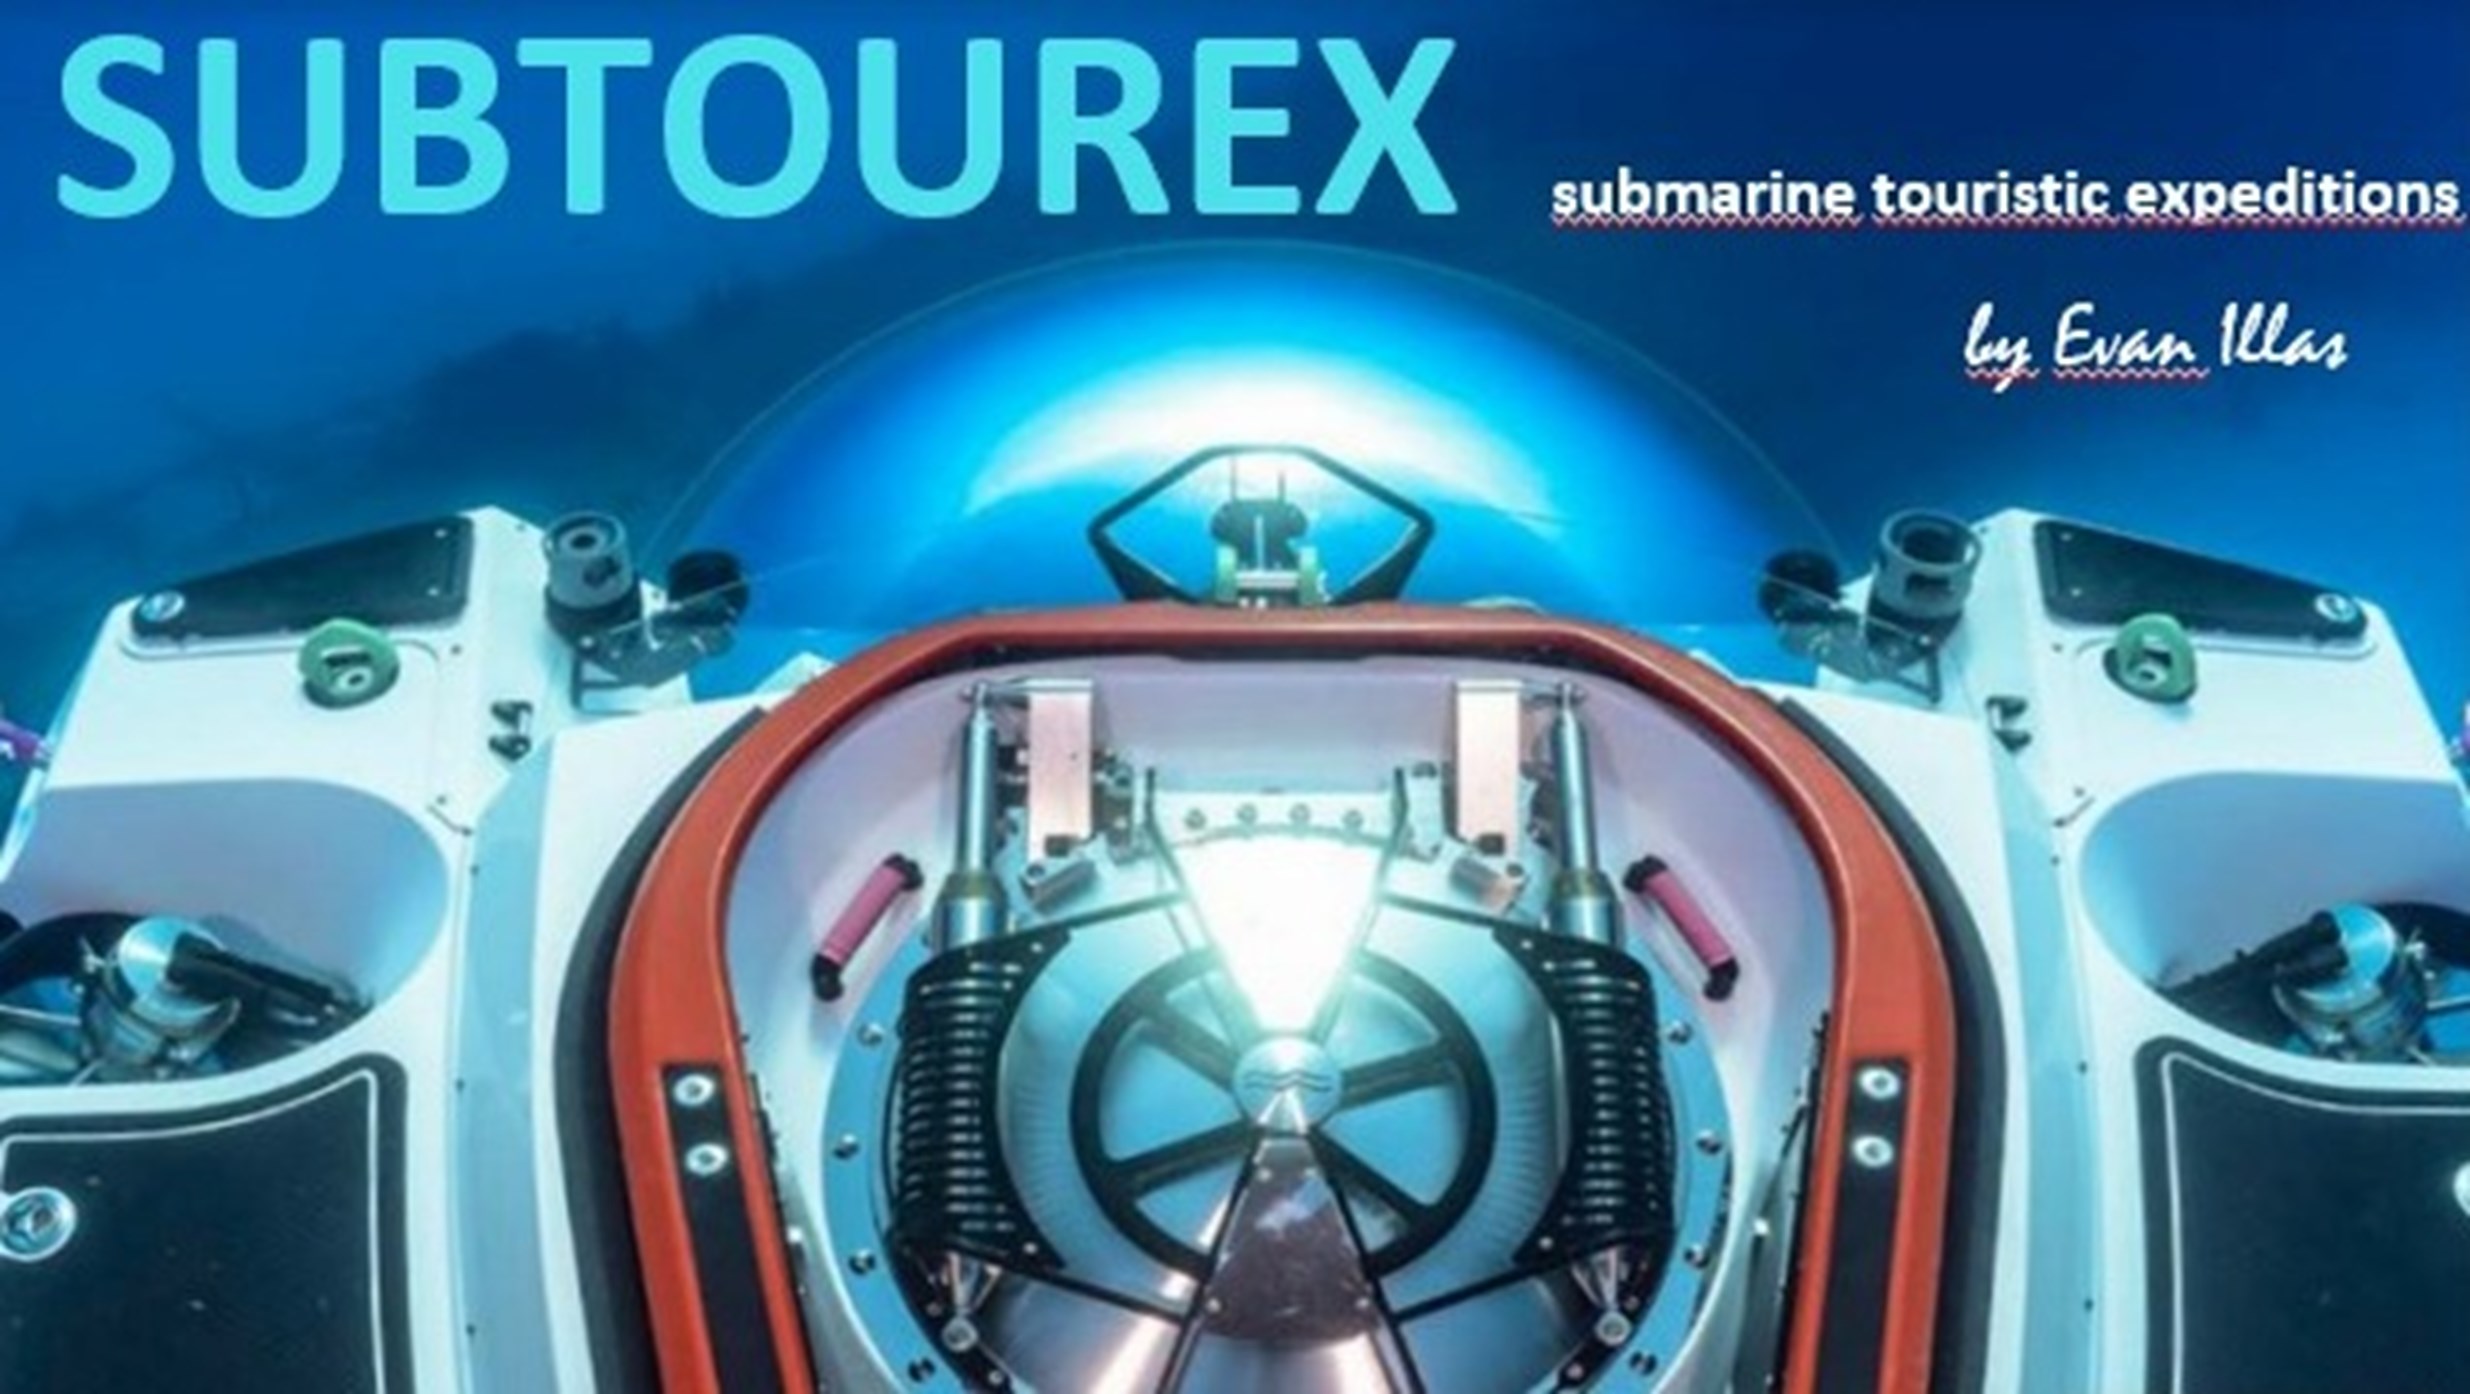 inmersiones con mini submarinos turísticos SUBTOUREX